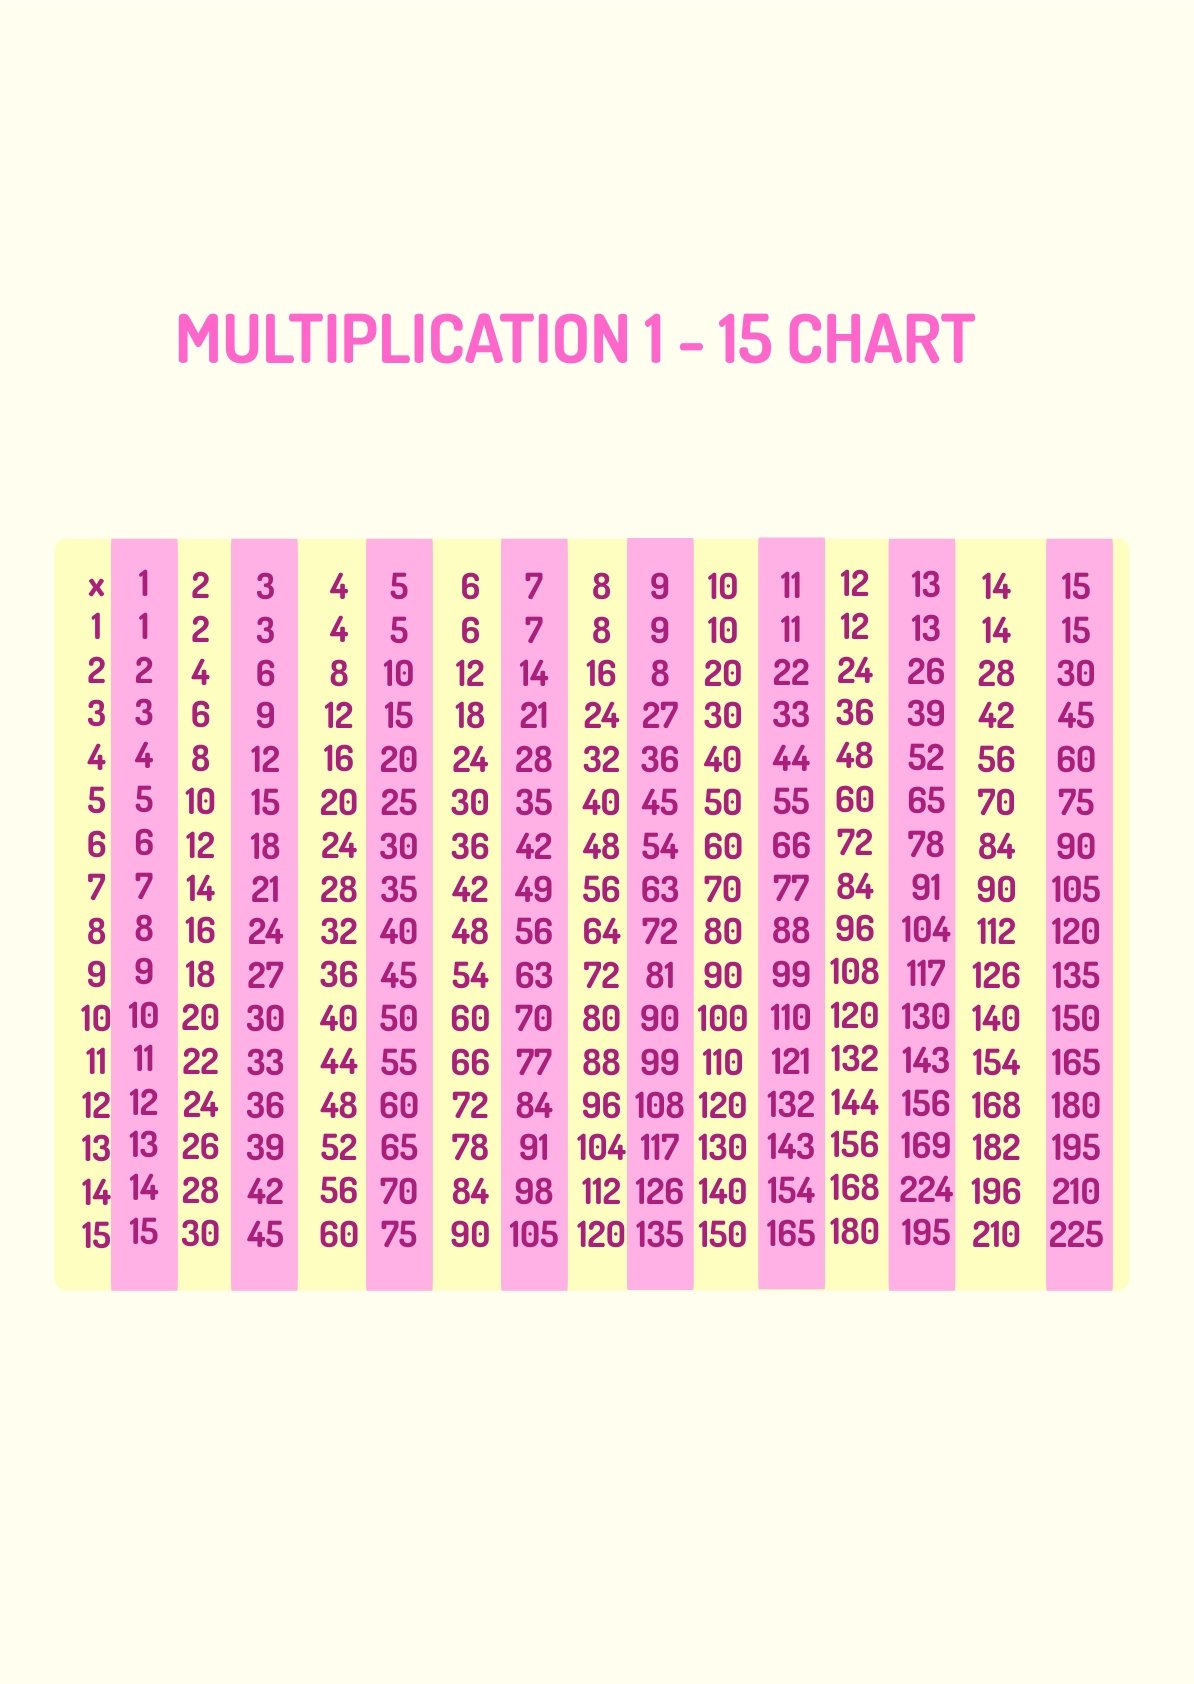 Multiplication Chart 1 - 15